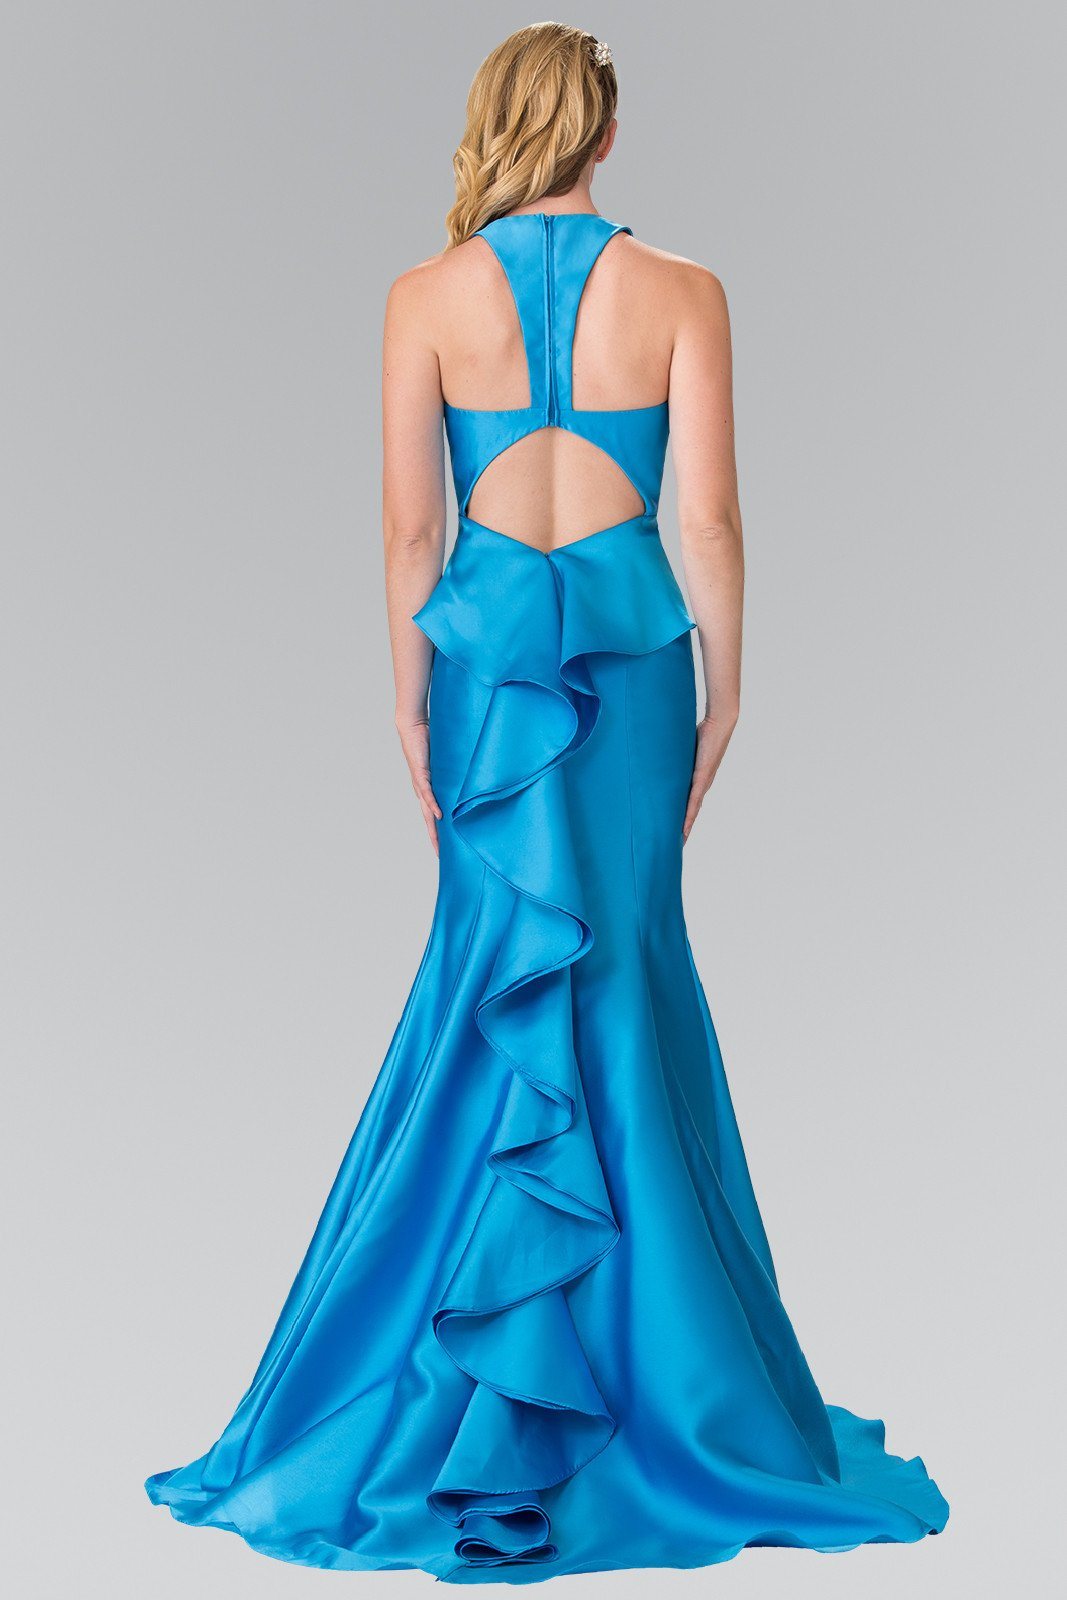 Ruffled Mermaid Gown with Open Back by Elizabeth K GL2224-Long Formal Dresses-ABC Fashion